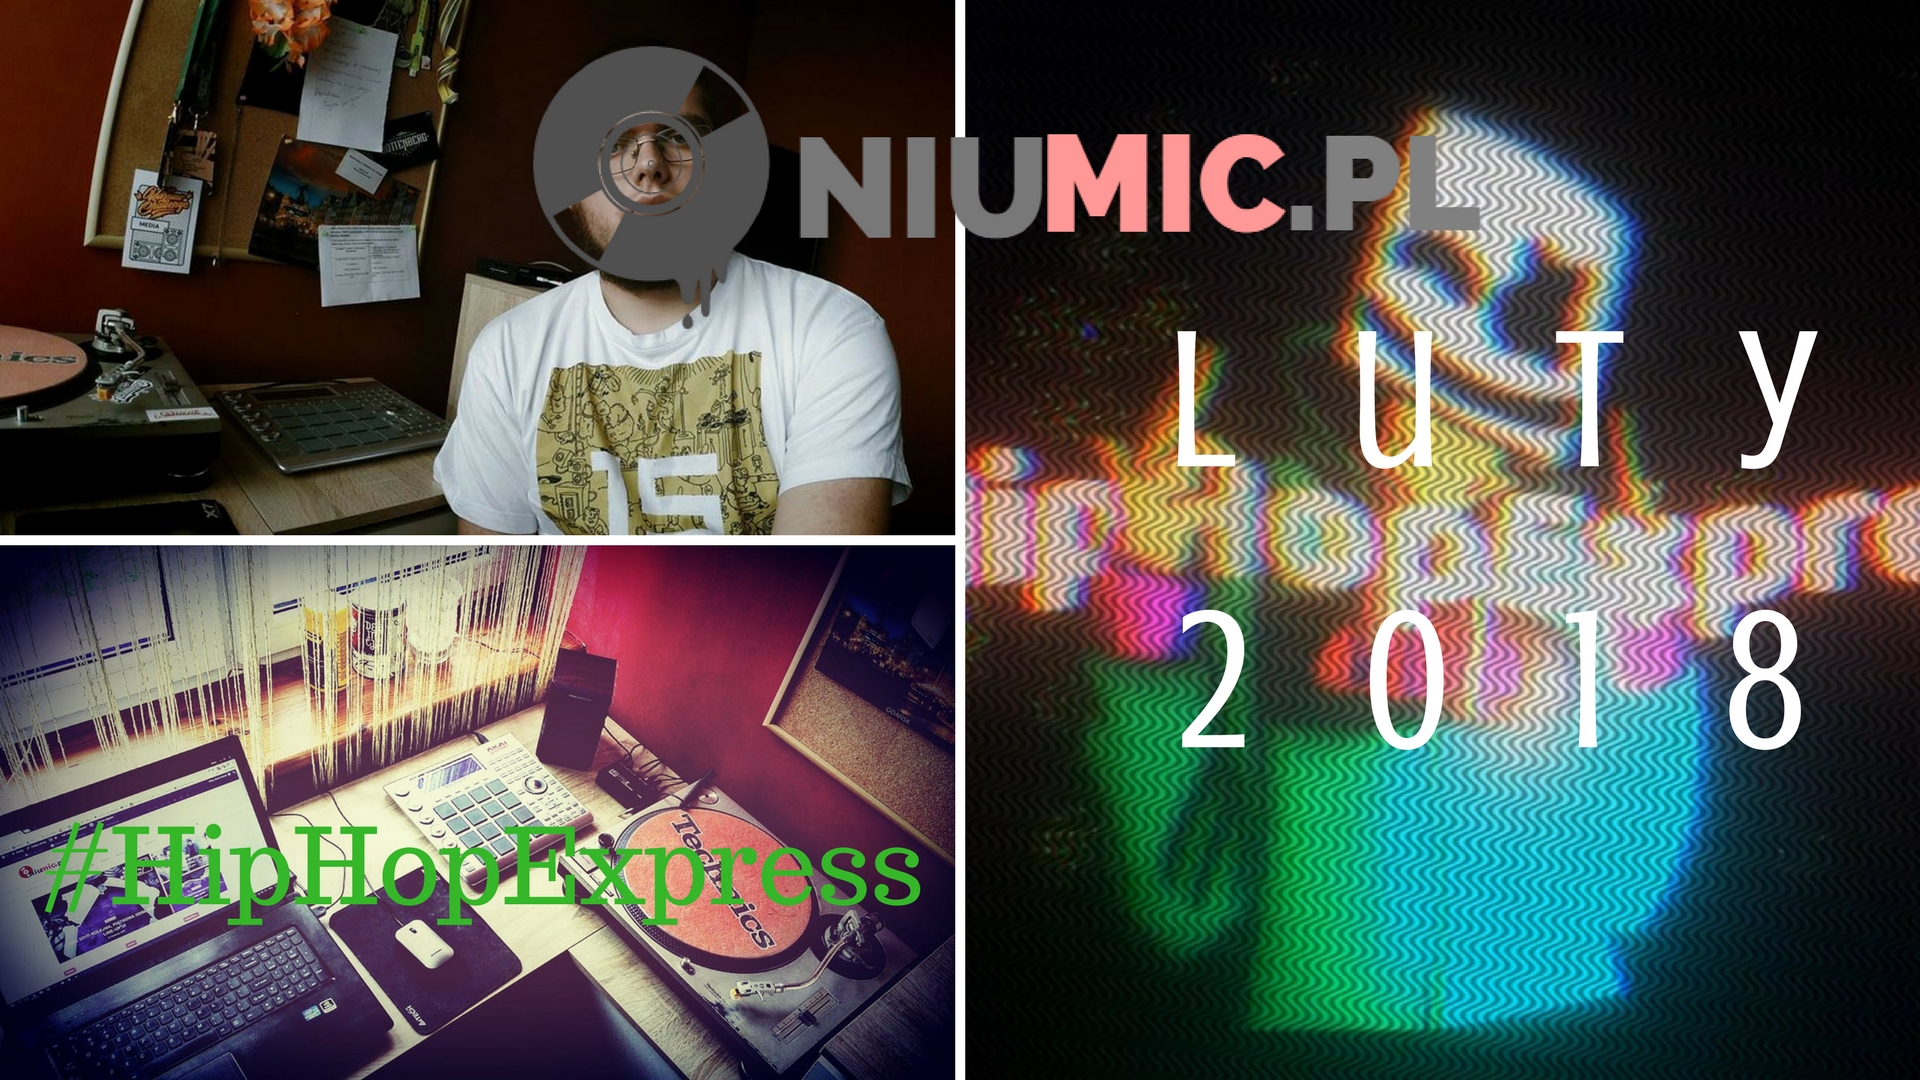 Luty 2018 || #HipHopExpress || niumic.pl